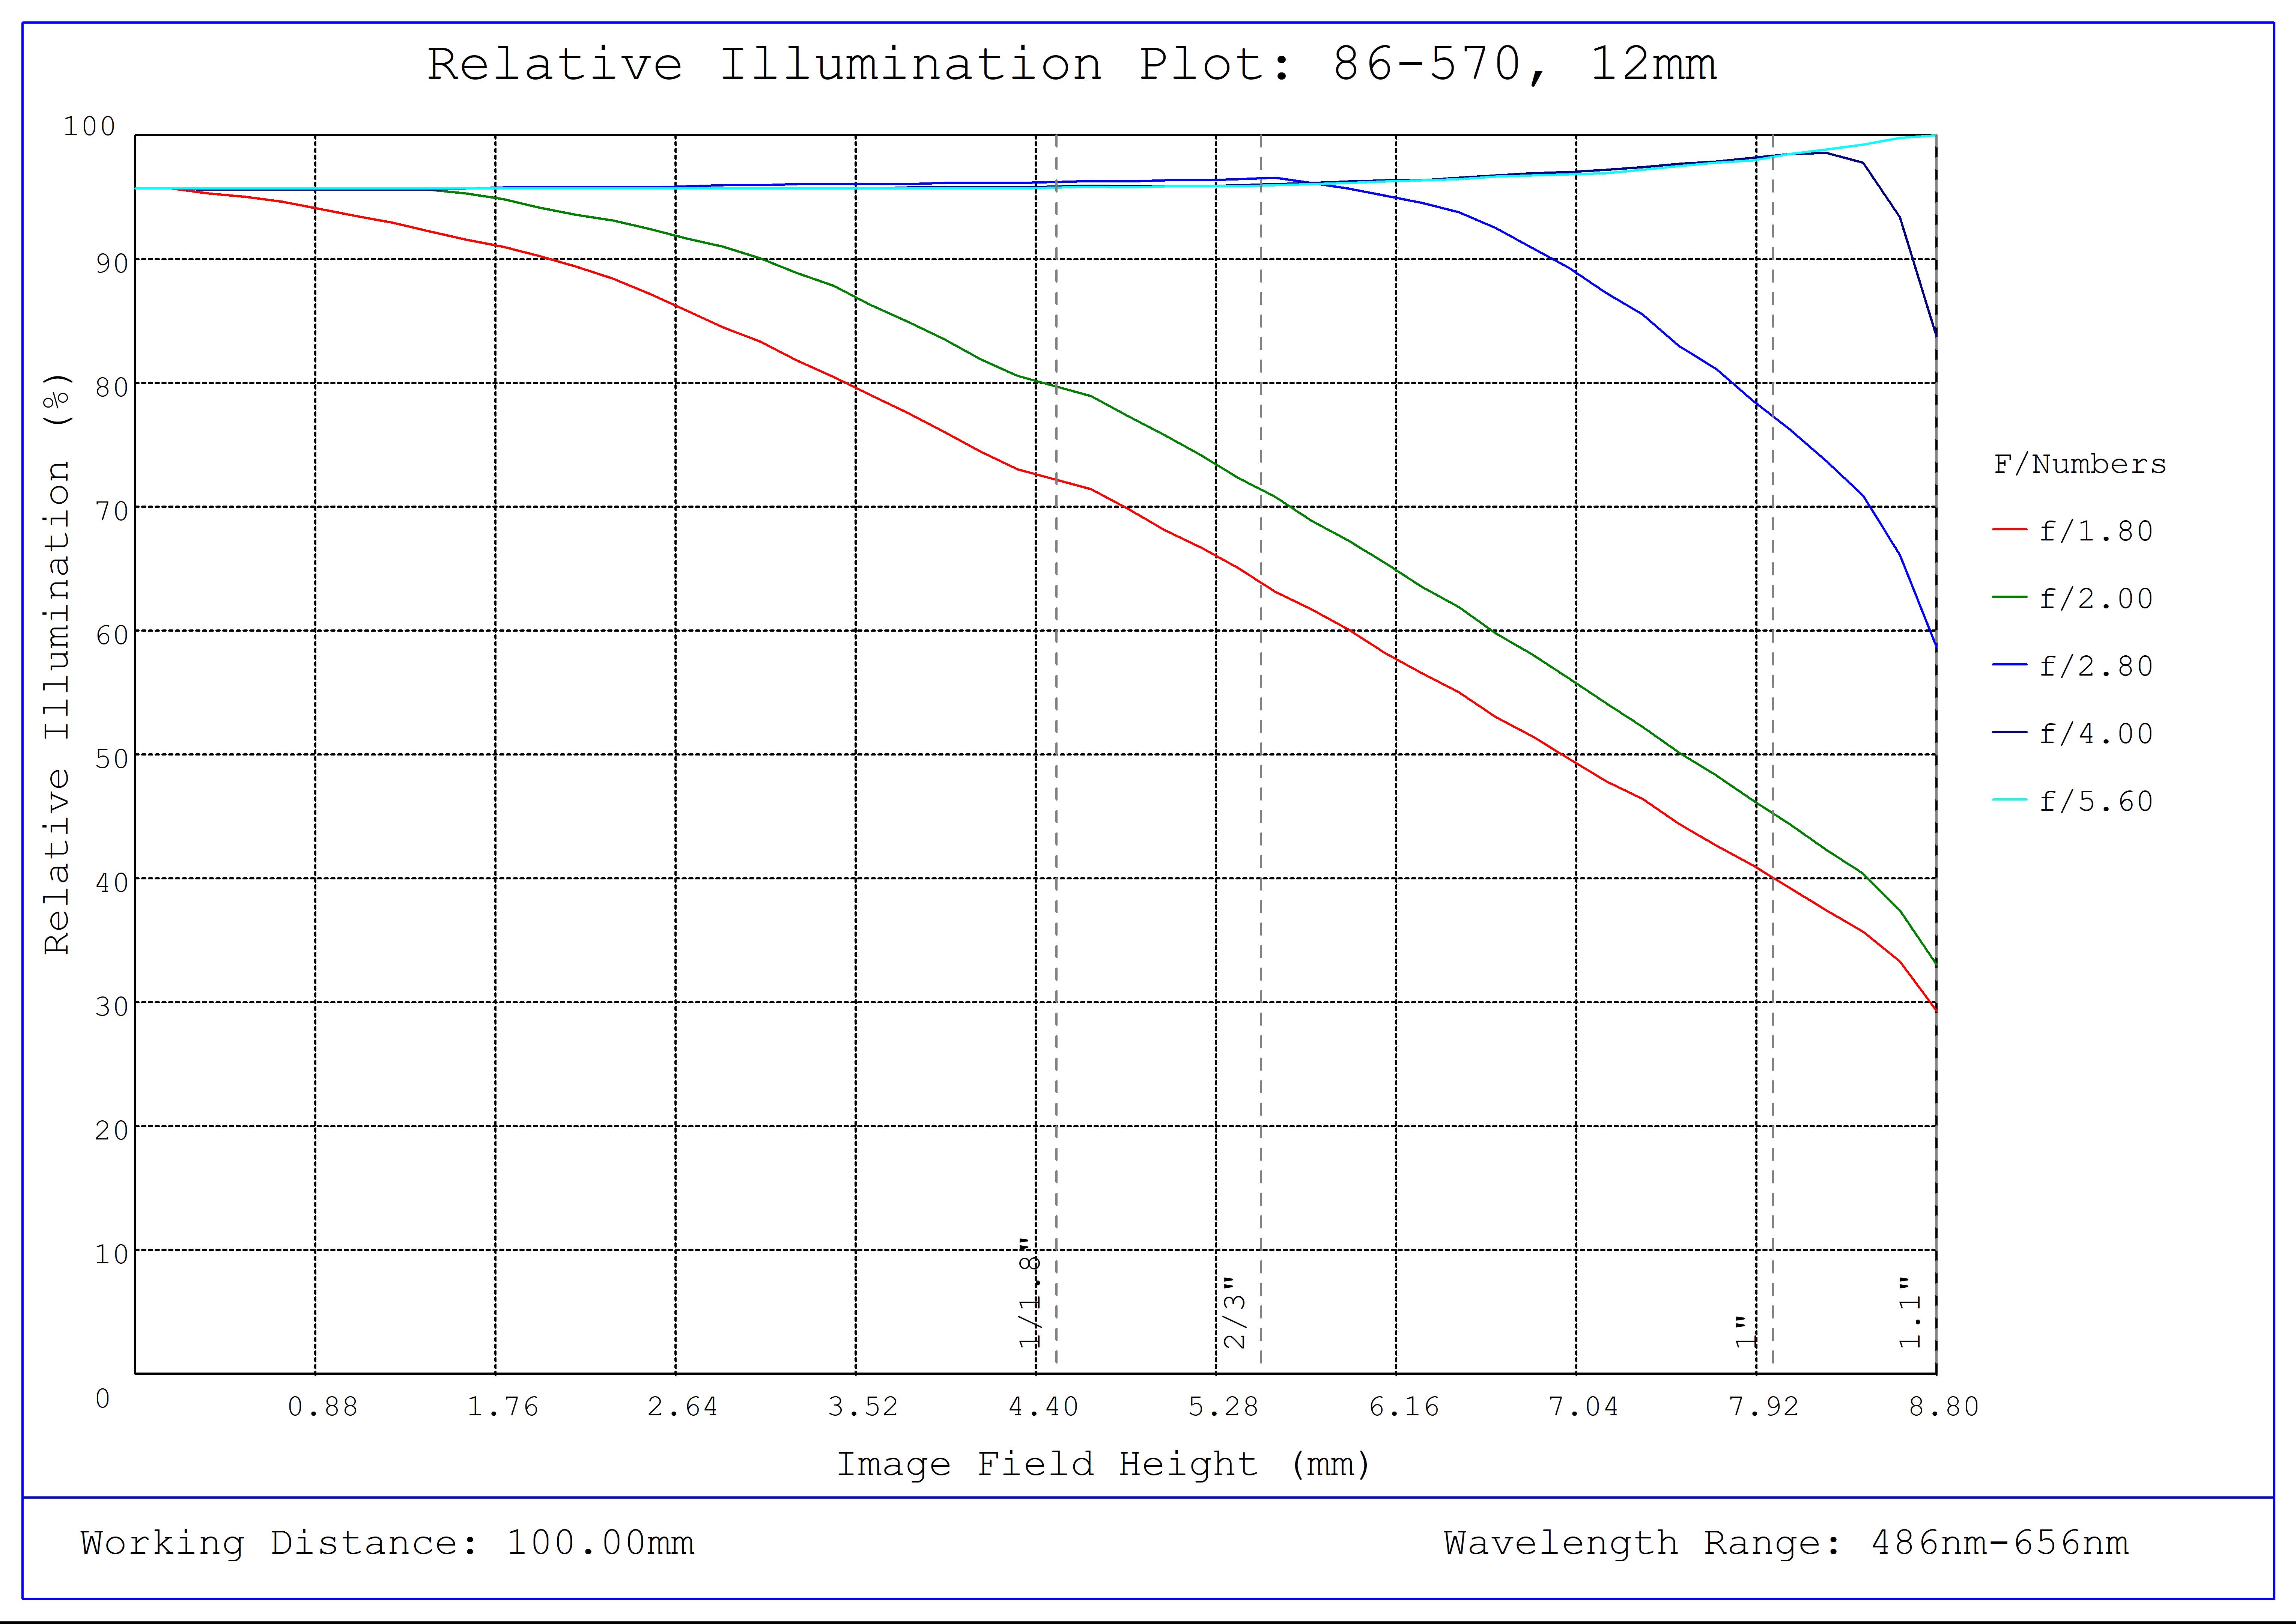 #86-570, 12mm Focal Length, HP Series Fixed Focal Length Lens, Relative Illumination Plot